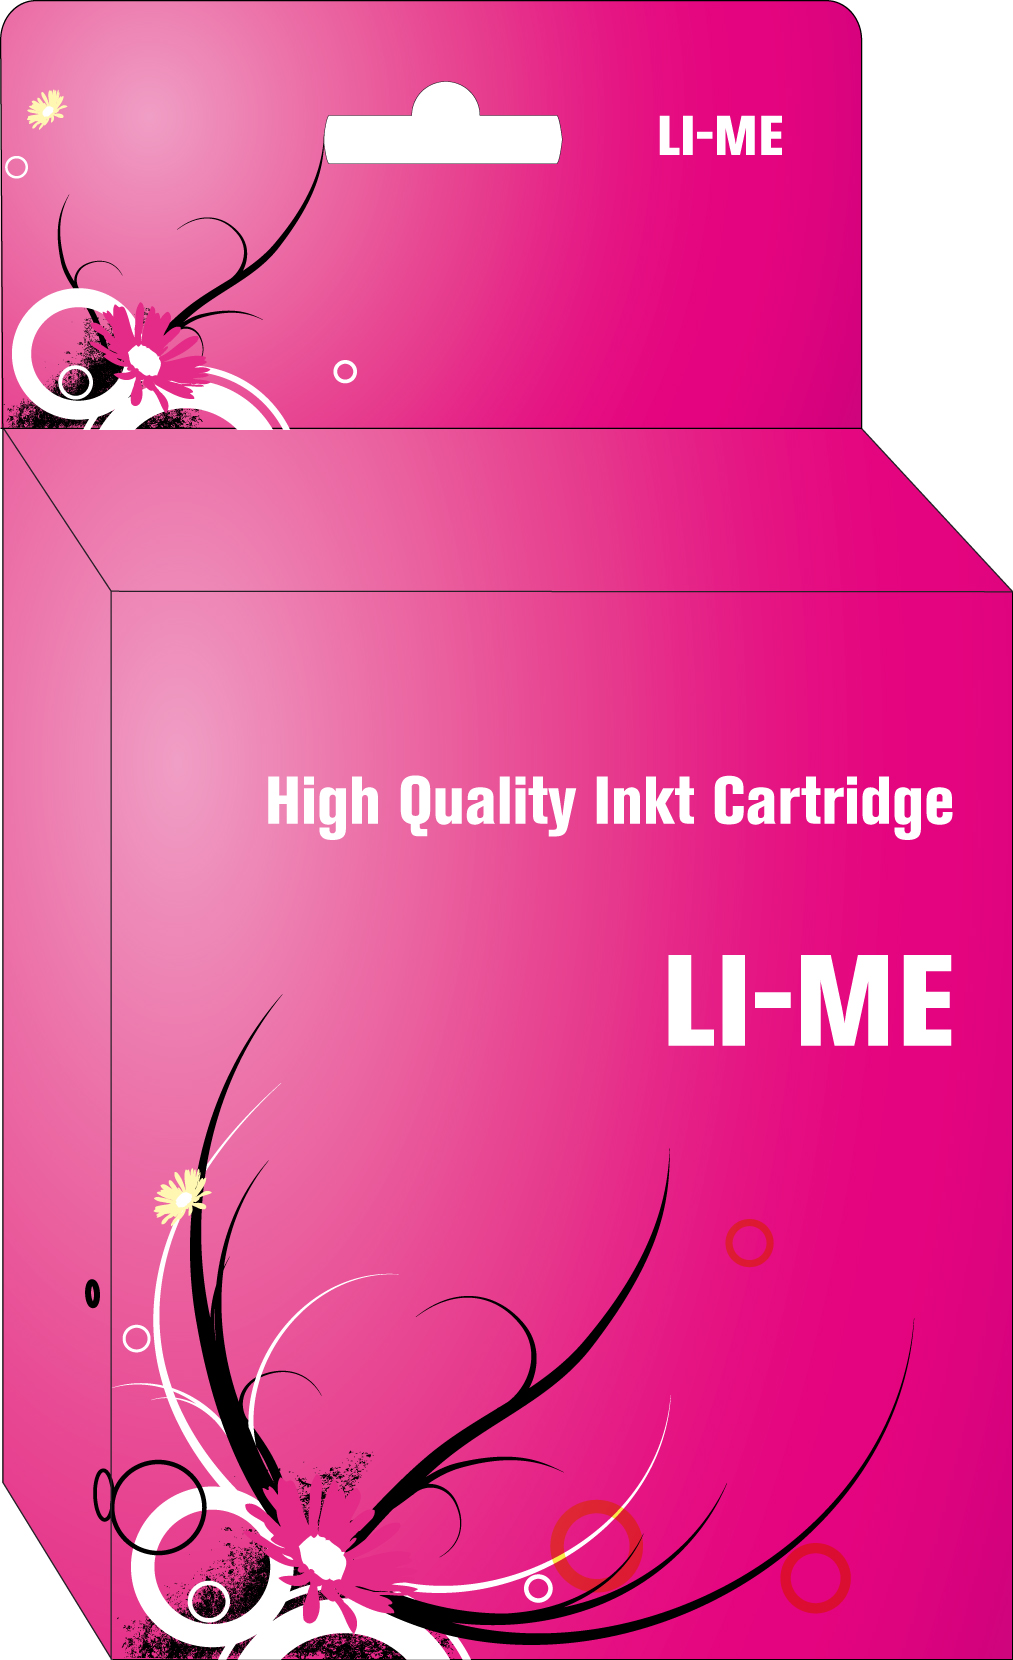 LI-ME Inkt Cartridge 951XL Magenta 17ml